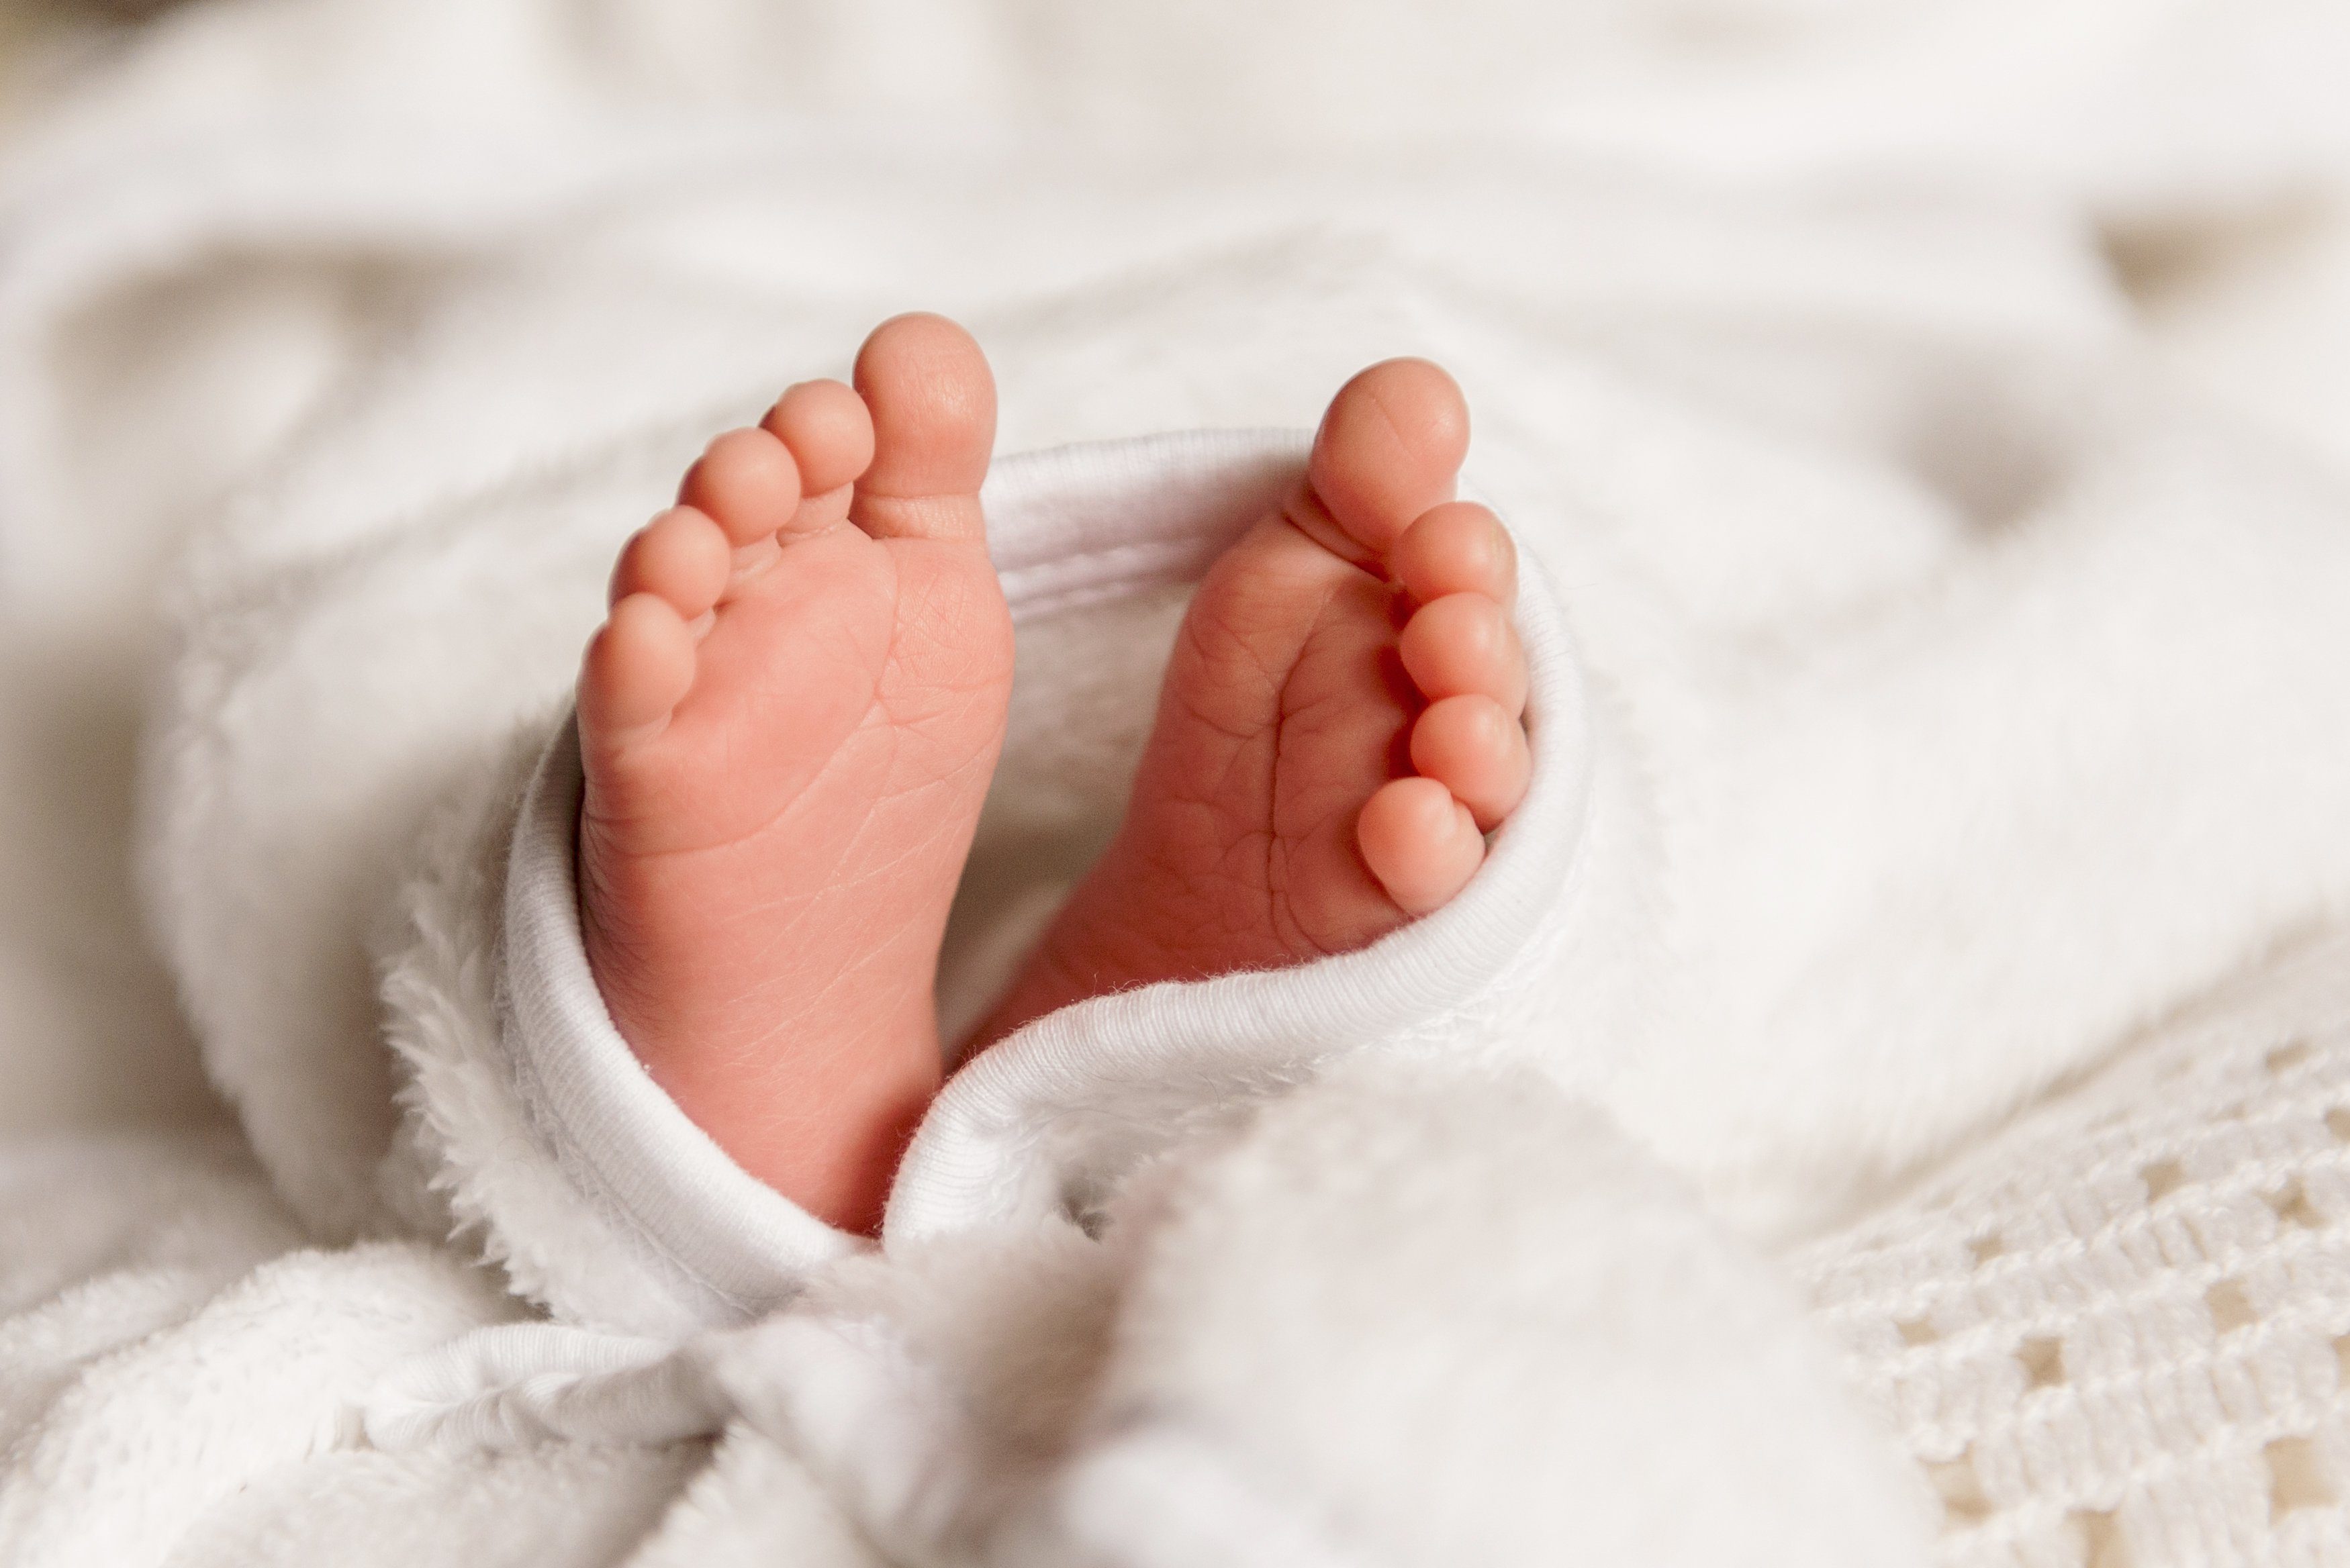 Bare feet of a cute newborn baby in warm white blanket. Childhood. Small bare feet of a little baby girl or boy. Sleeping newborn child.